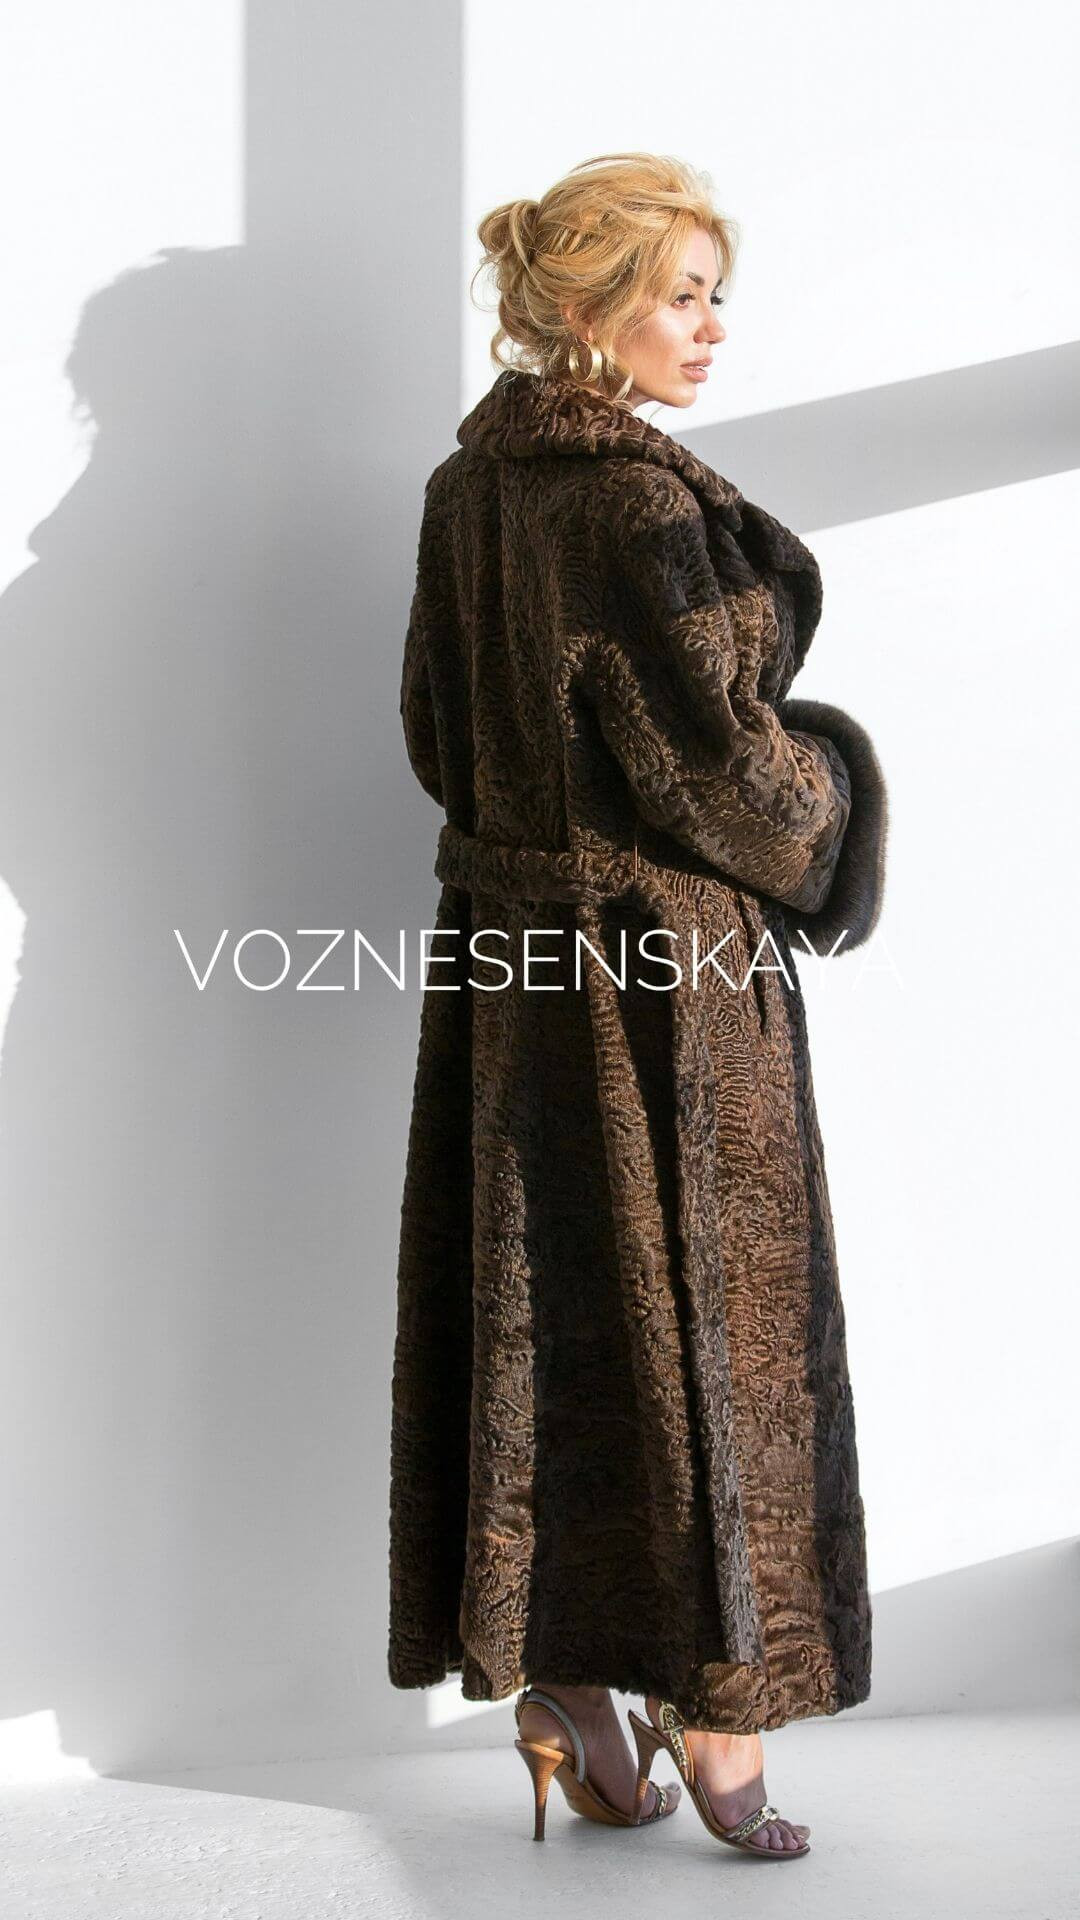 Sew an astrakhan fur coat